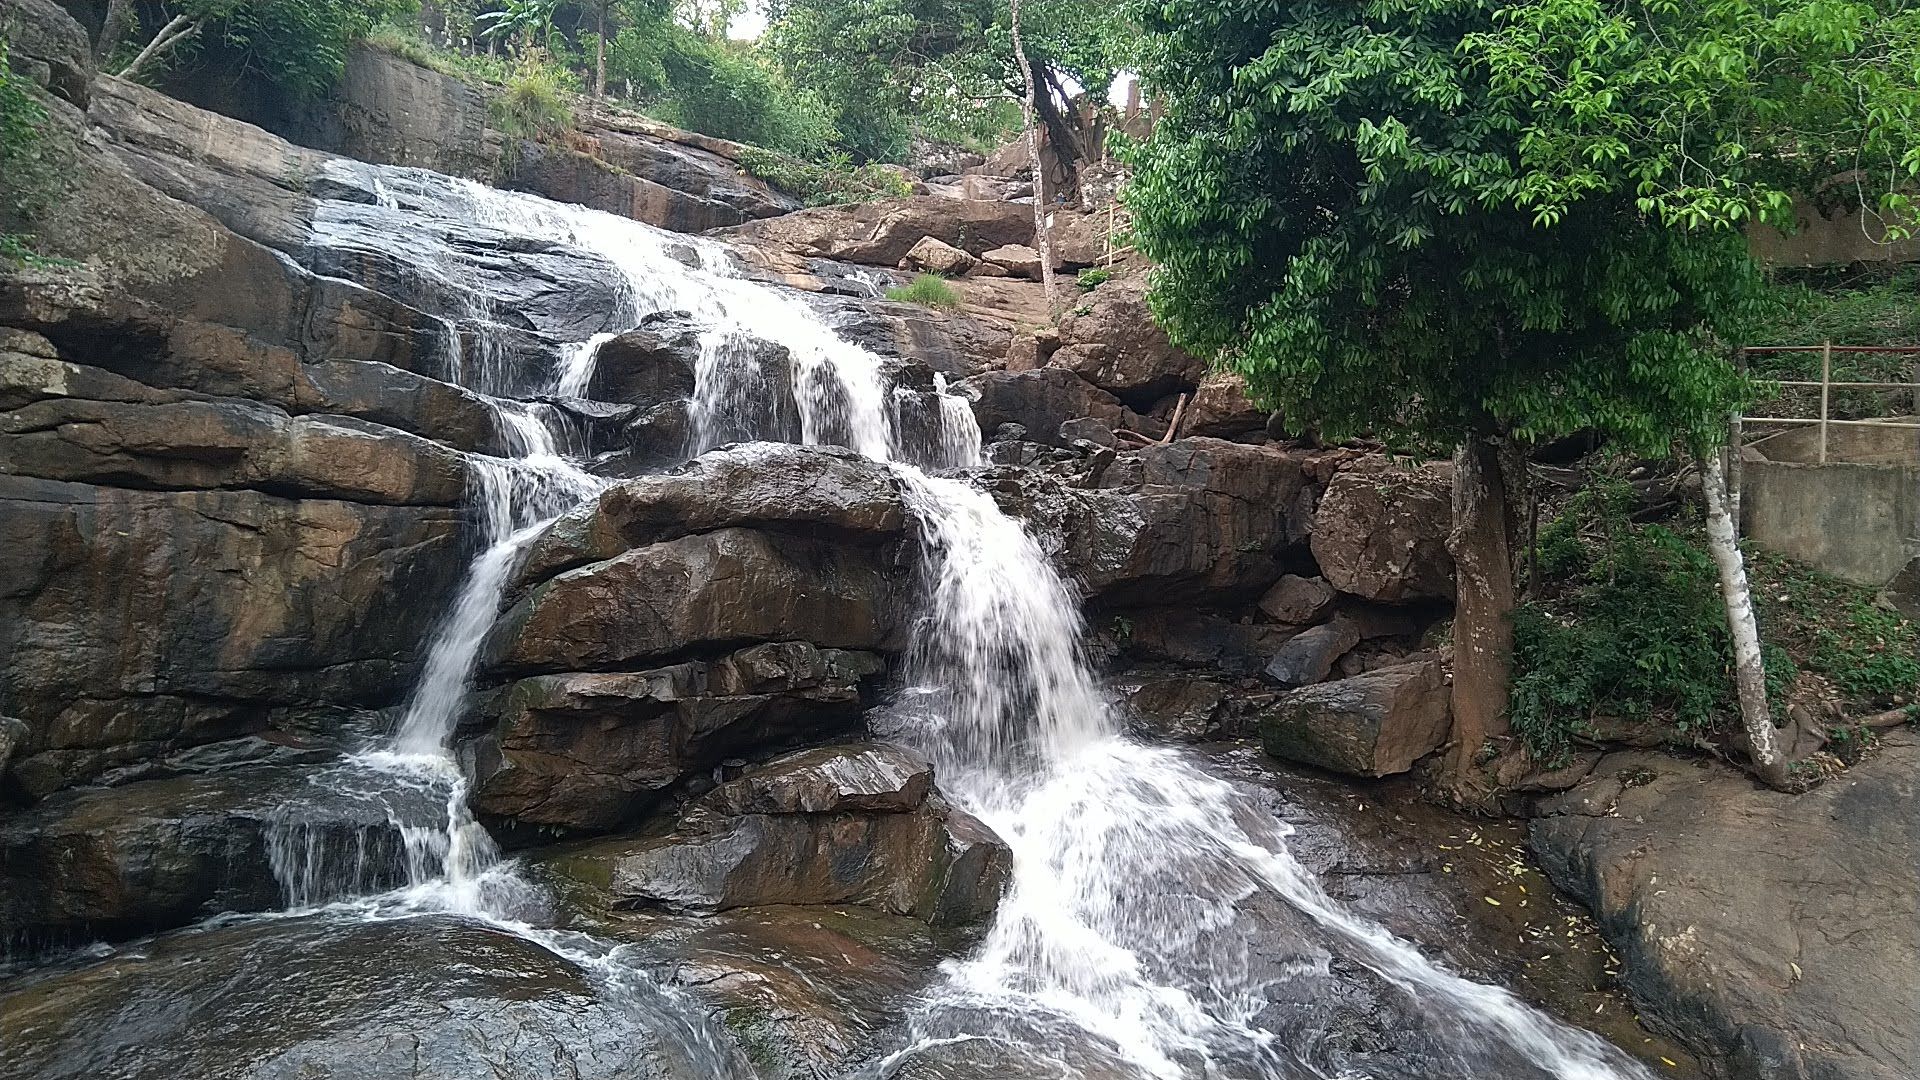 kotipalli waterfalls